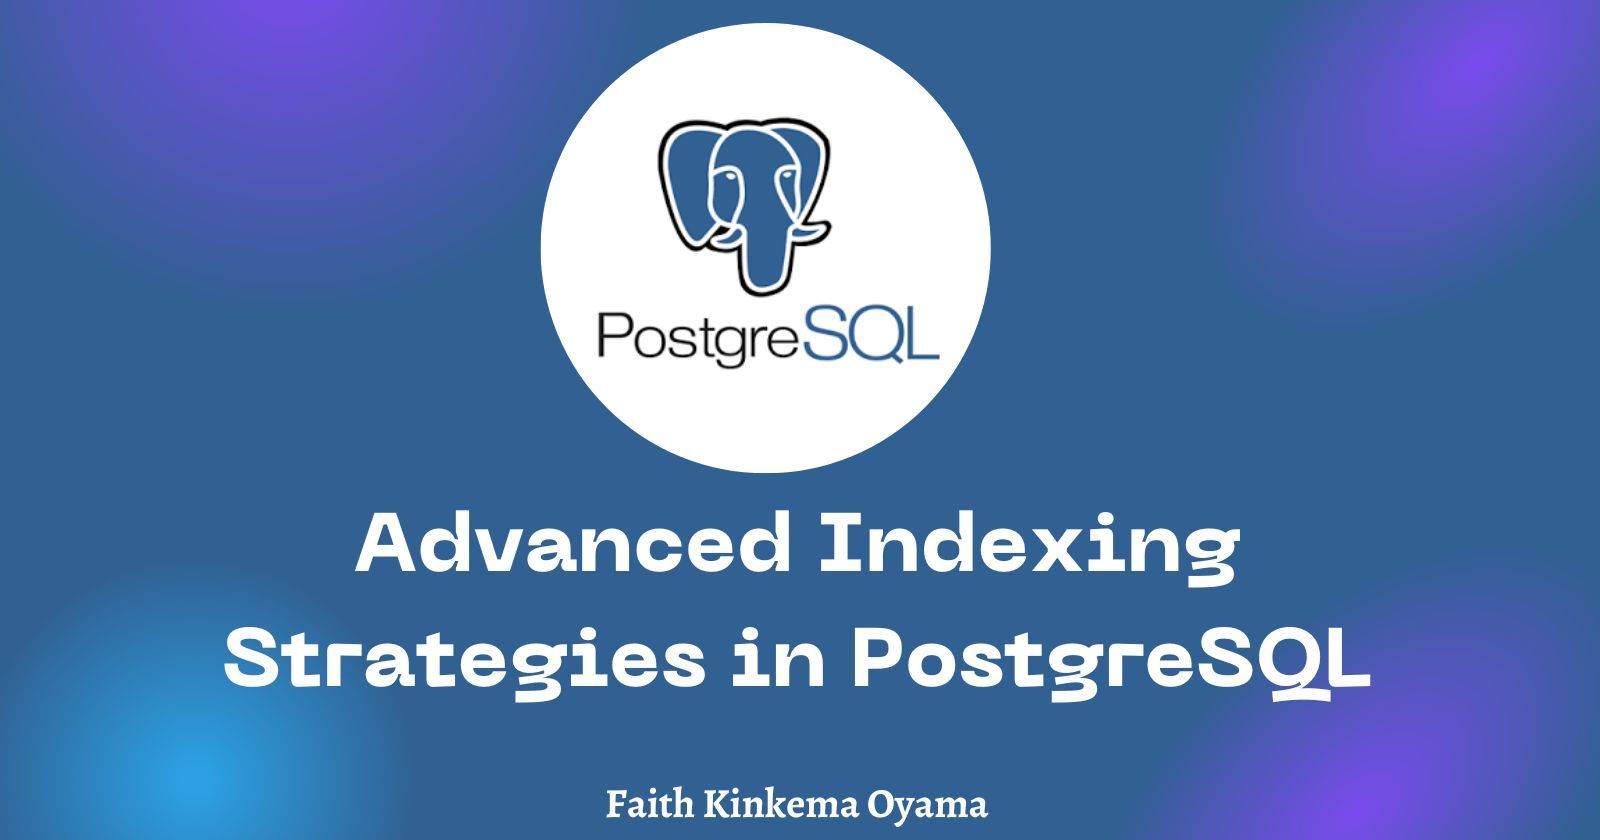 Advanced Indexing Strategies in PostgreSQL